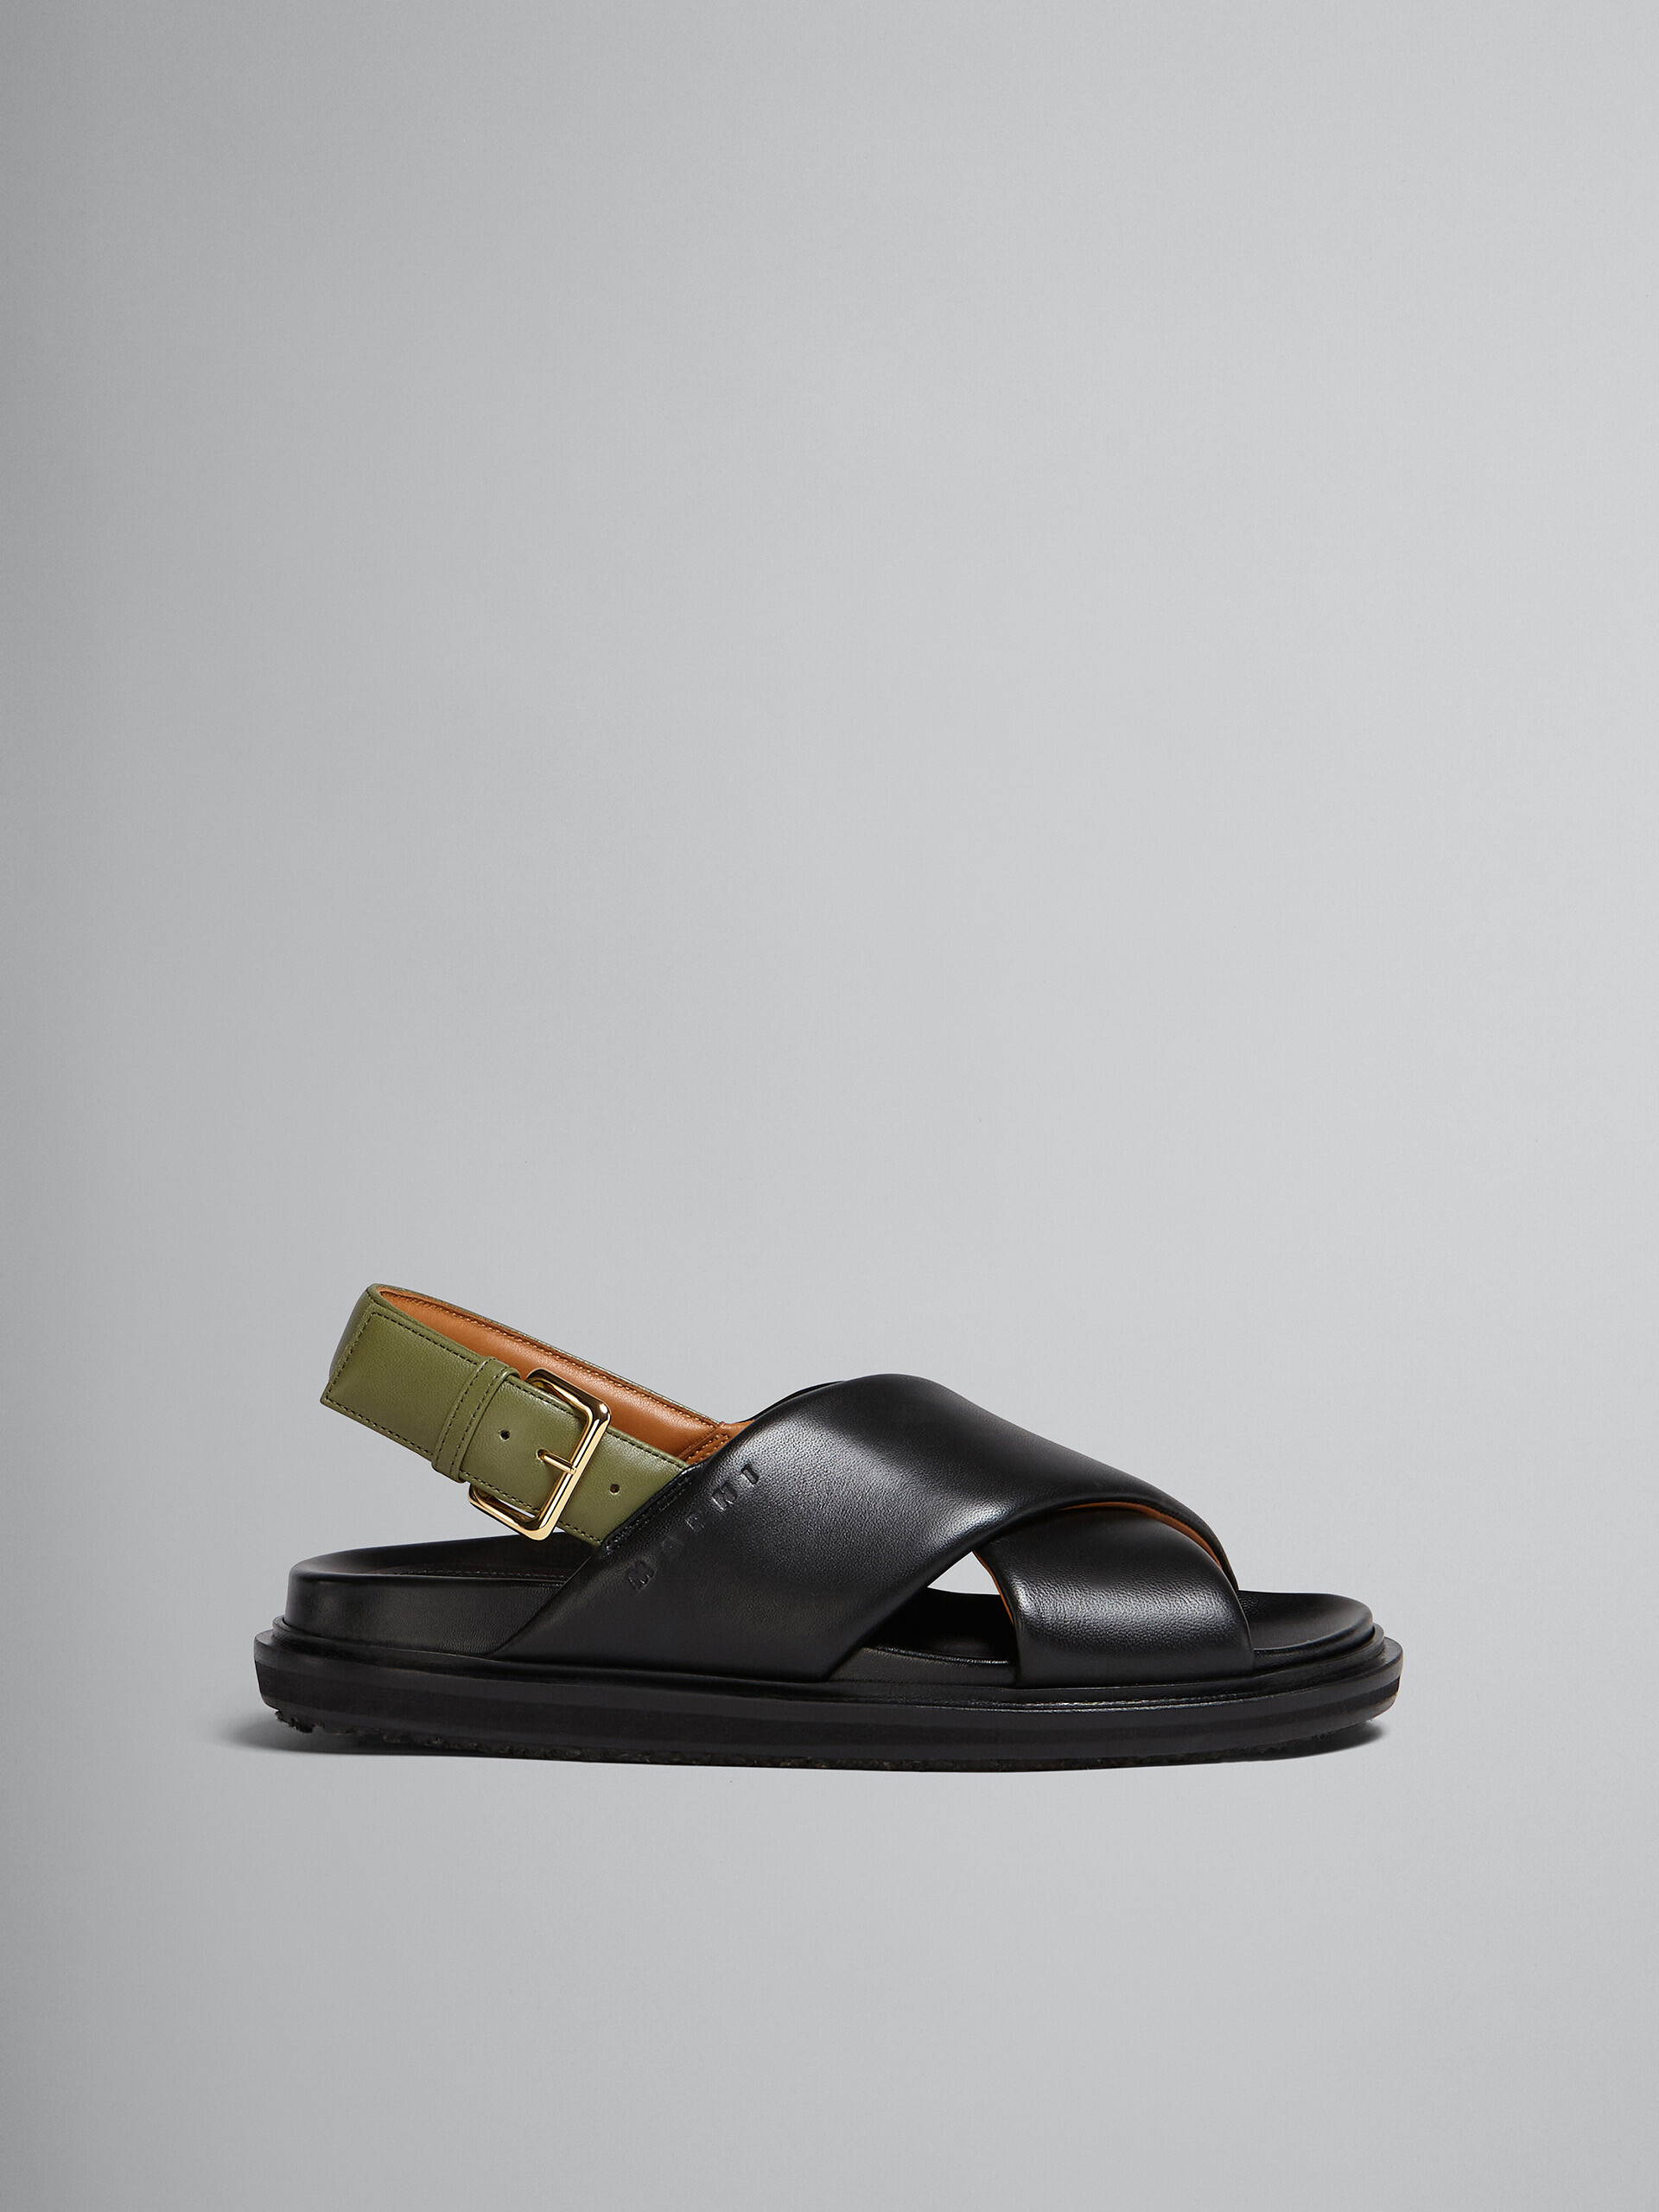 Sandales fussbett en cuir noir et vert - Sandales - Image 1